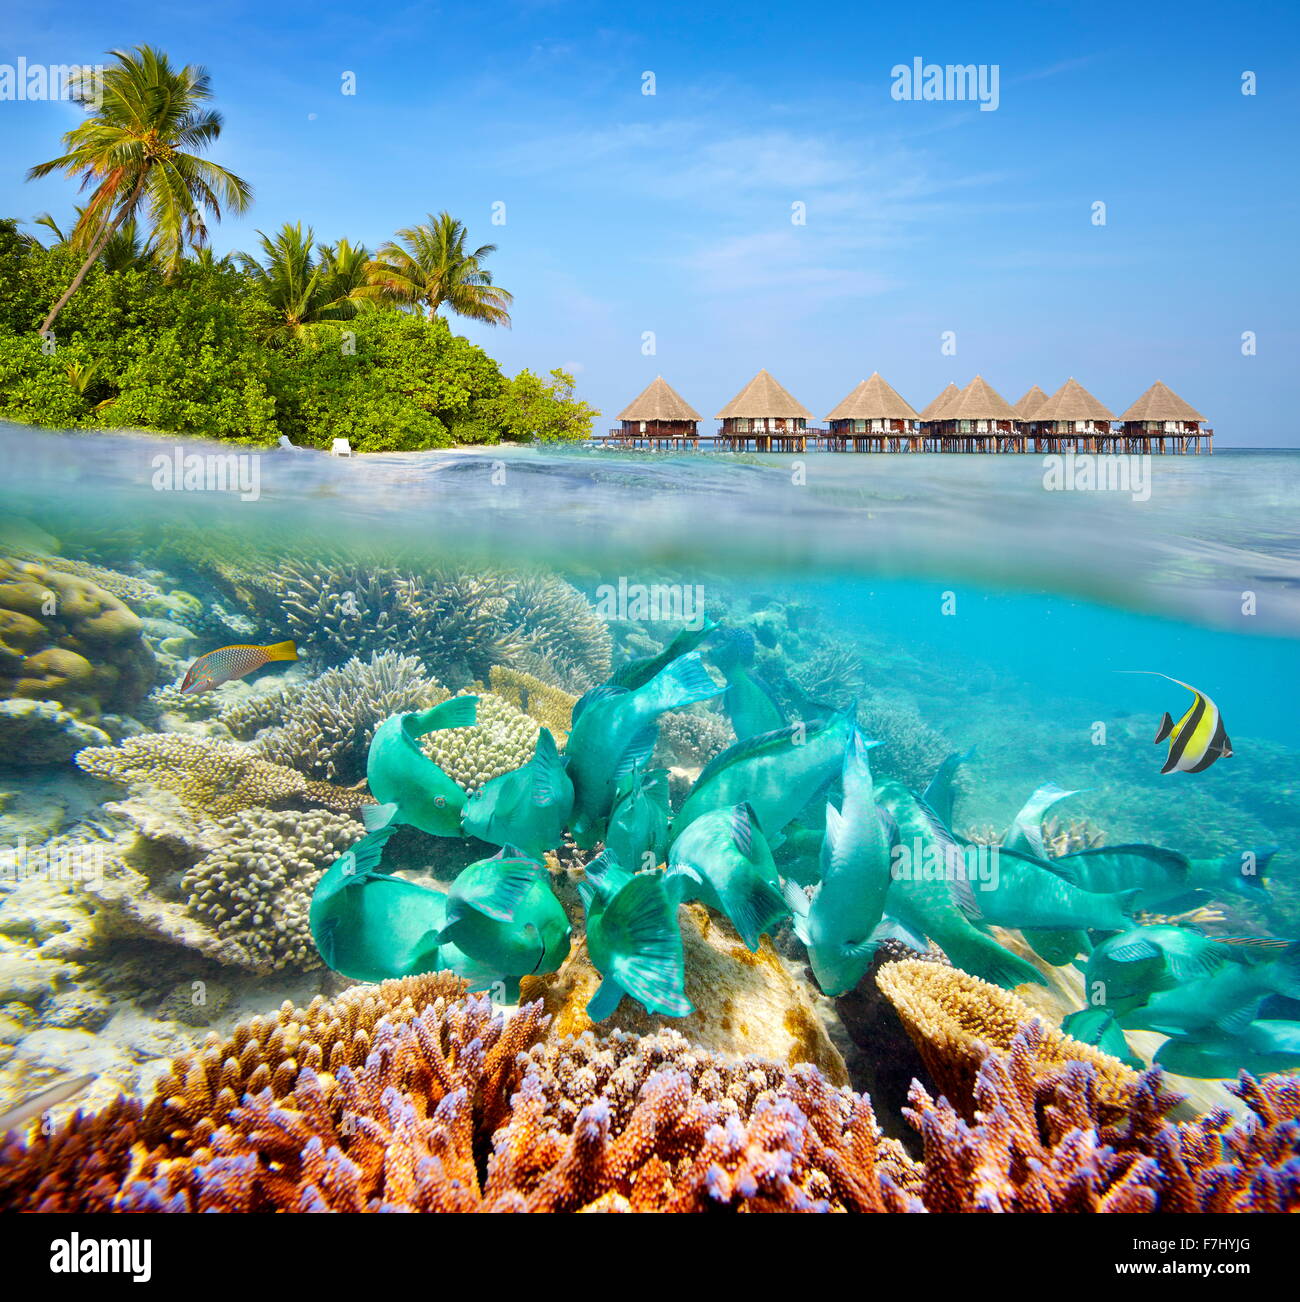 Underwater scenery at Maldives Island Stock Photo